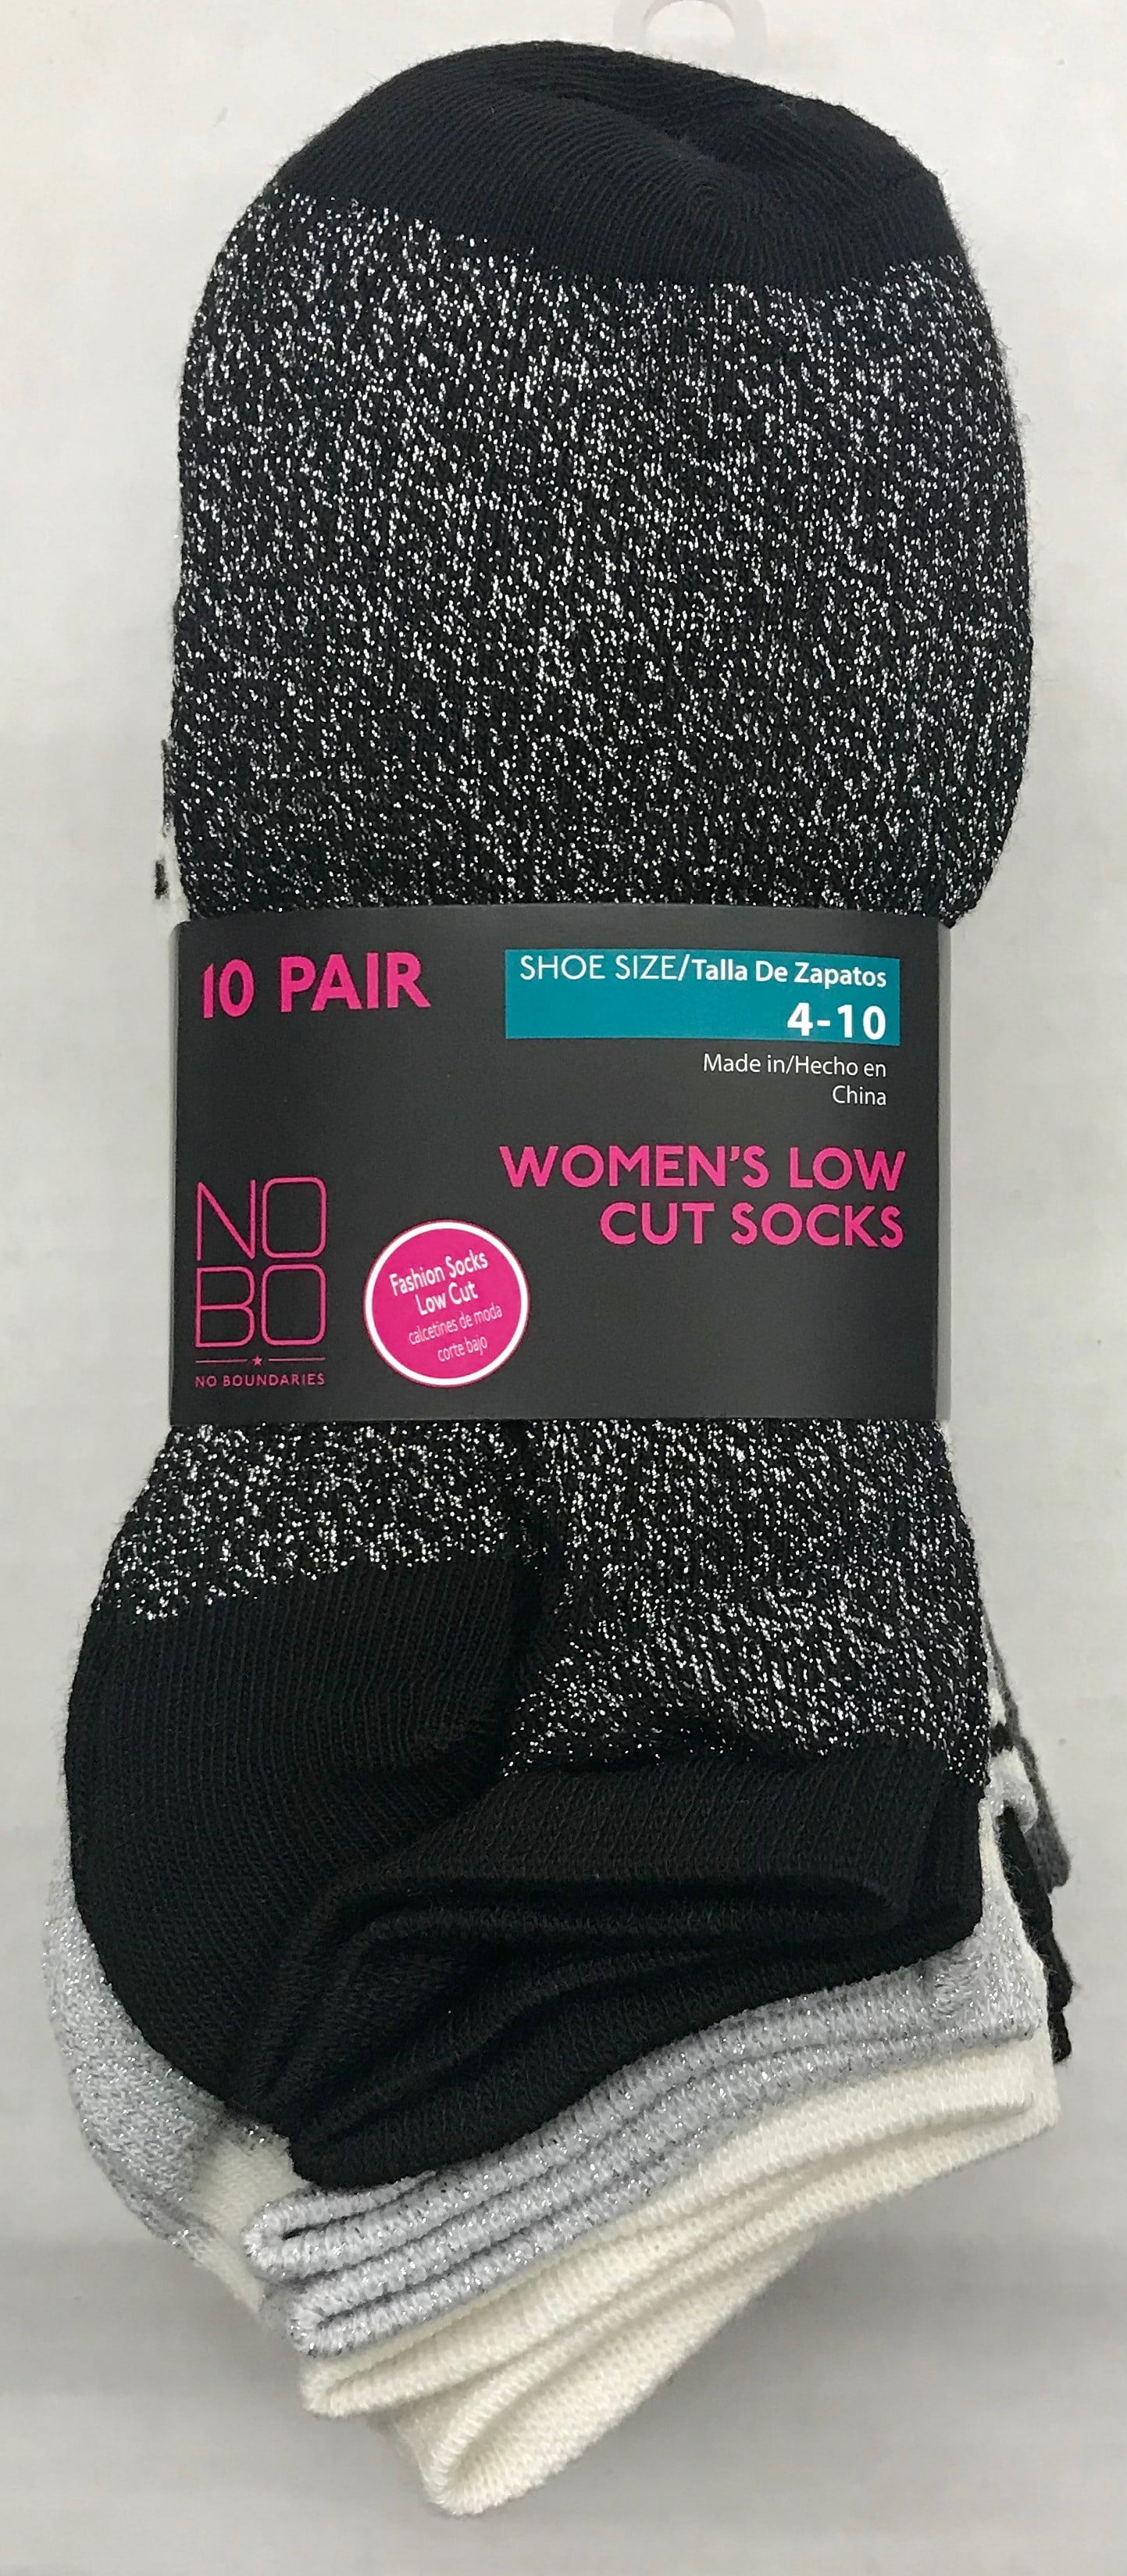 No Boundaries Women's Low Cut Socks, 10 Pair – Walmart Inventory ...